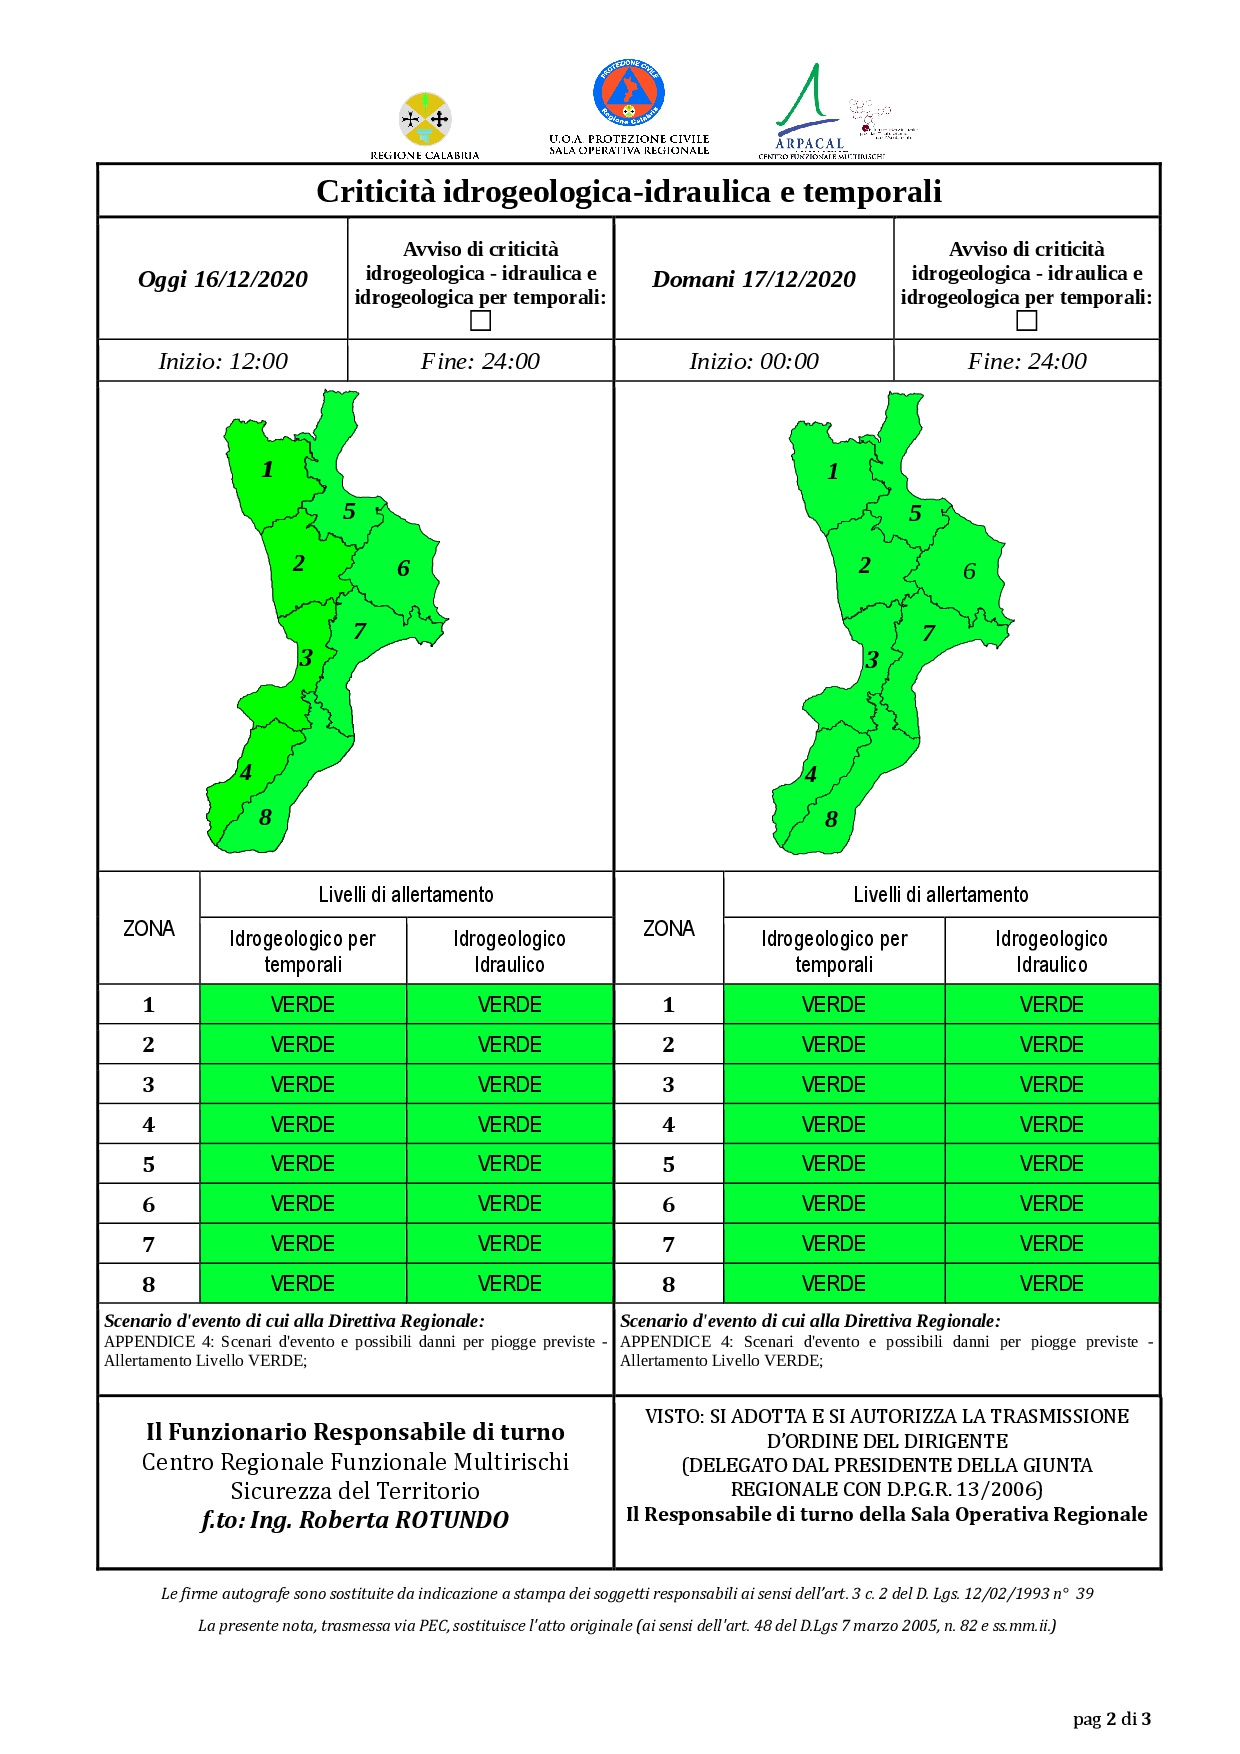 Criticità idrogeologica-idraulica e temporali in Calabria 16-12-2020